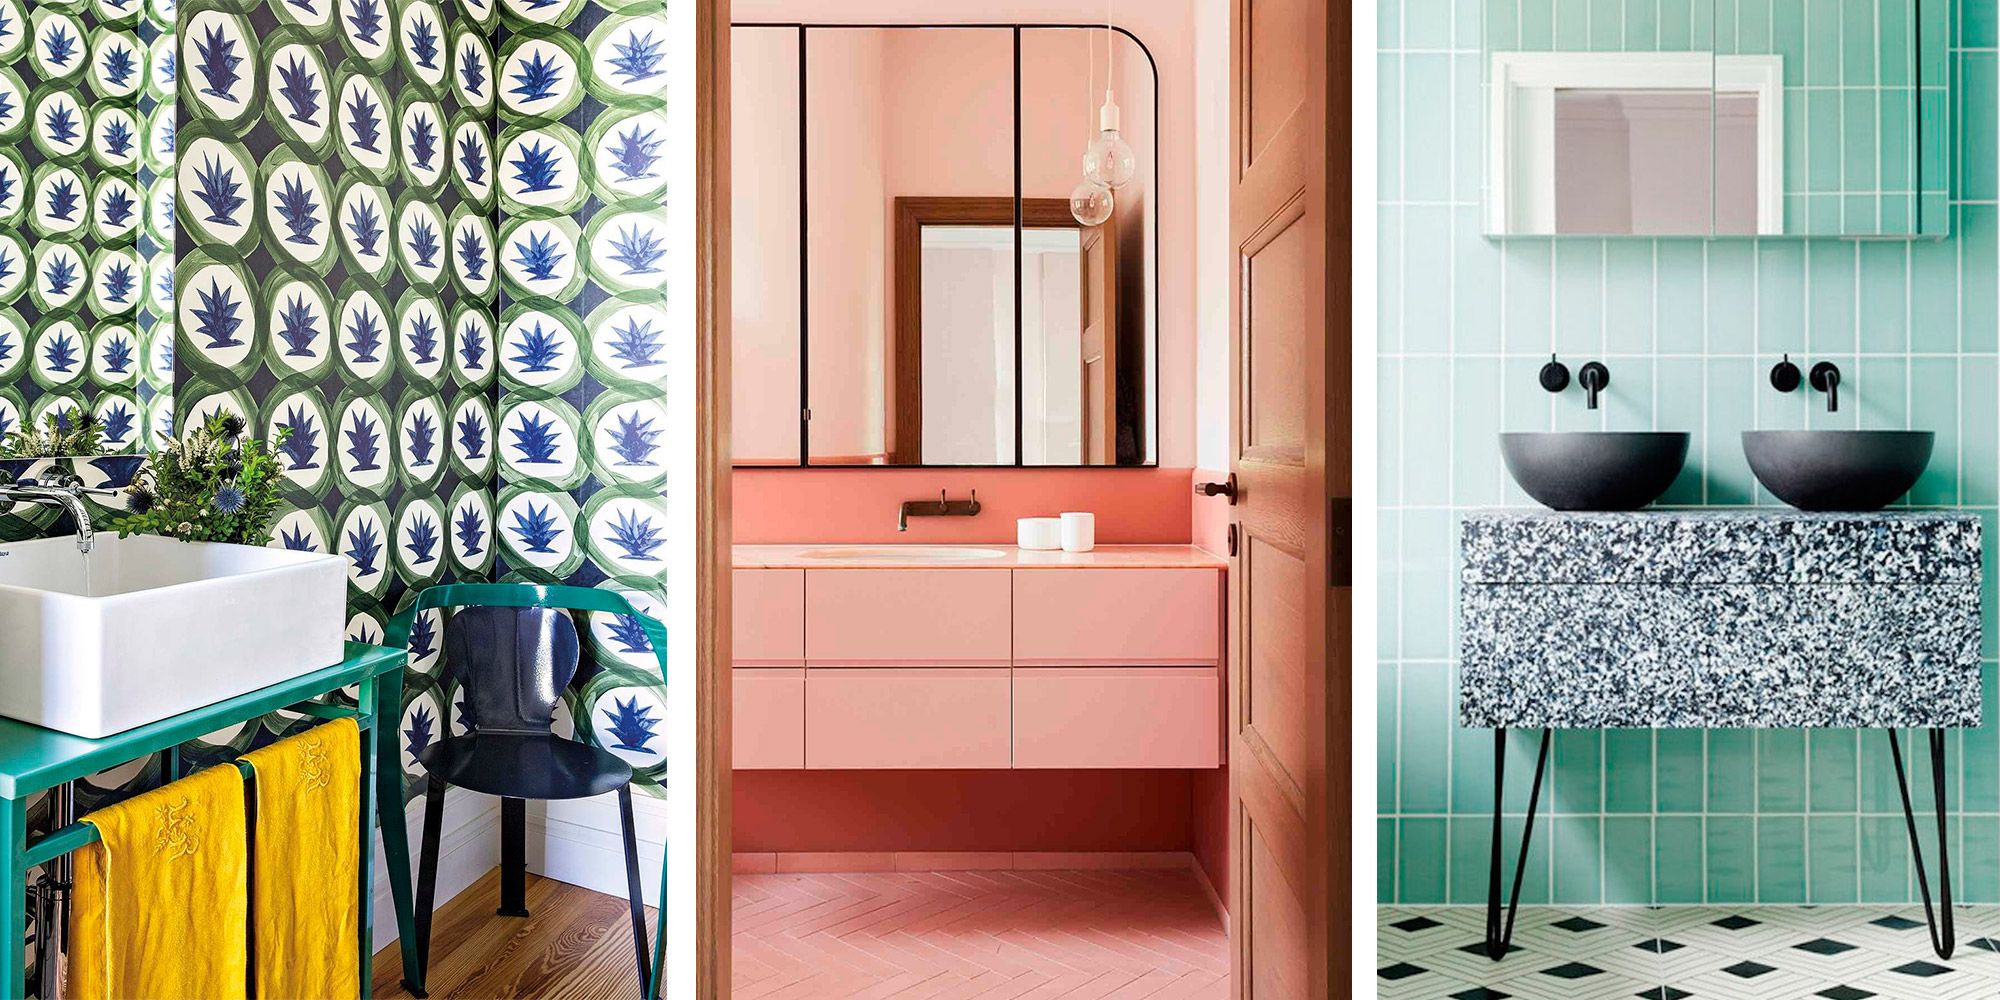 Ideas de decoración para baños modernos con espejos redondos